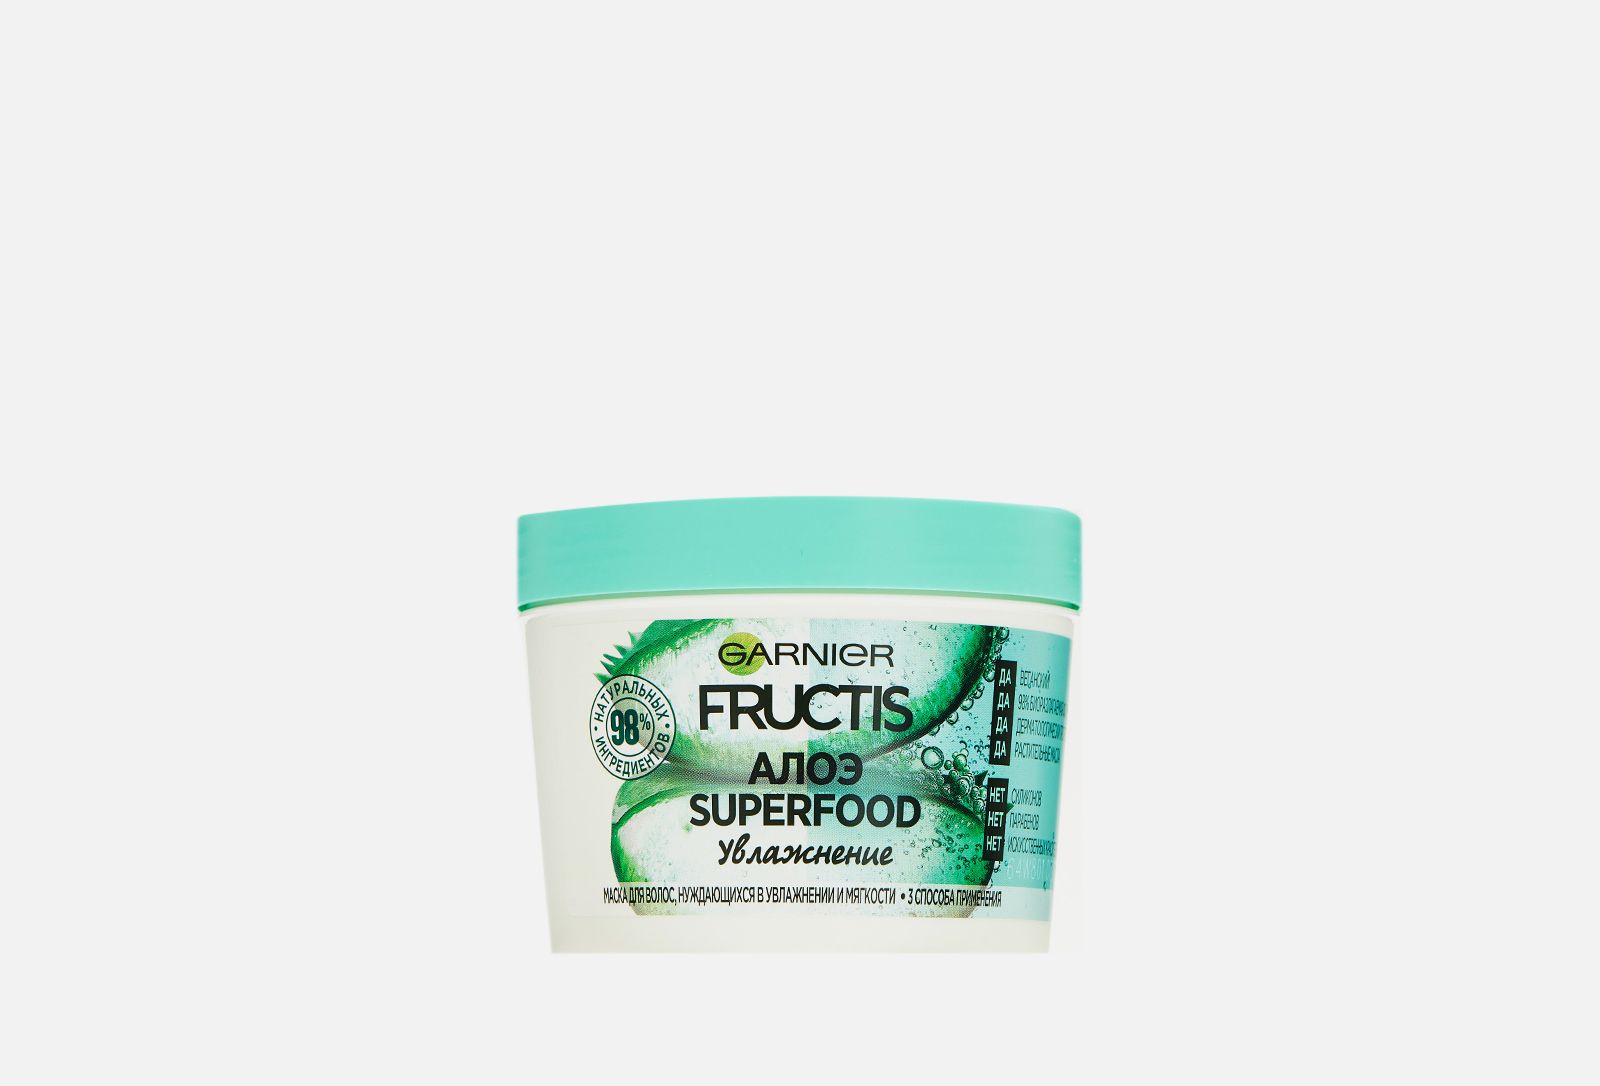 Маска garnier superfood. Fructis Superfood маска для волос алоэ 390мл. Garnier маска для волос алоэ. Гарньер суперфуд алоэ маска для волос. Маска увлажняющая для волос Superfood Garnier с алоэ.